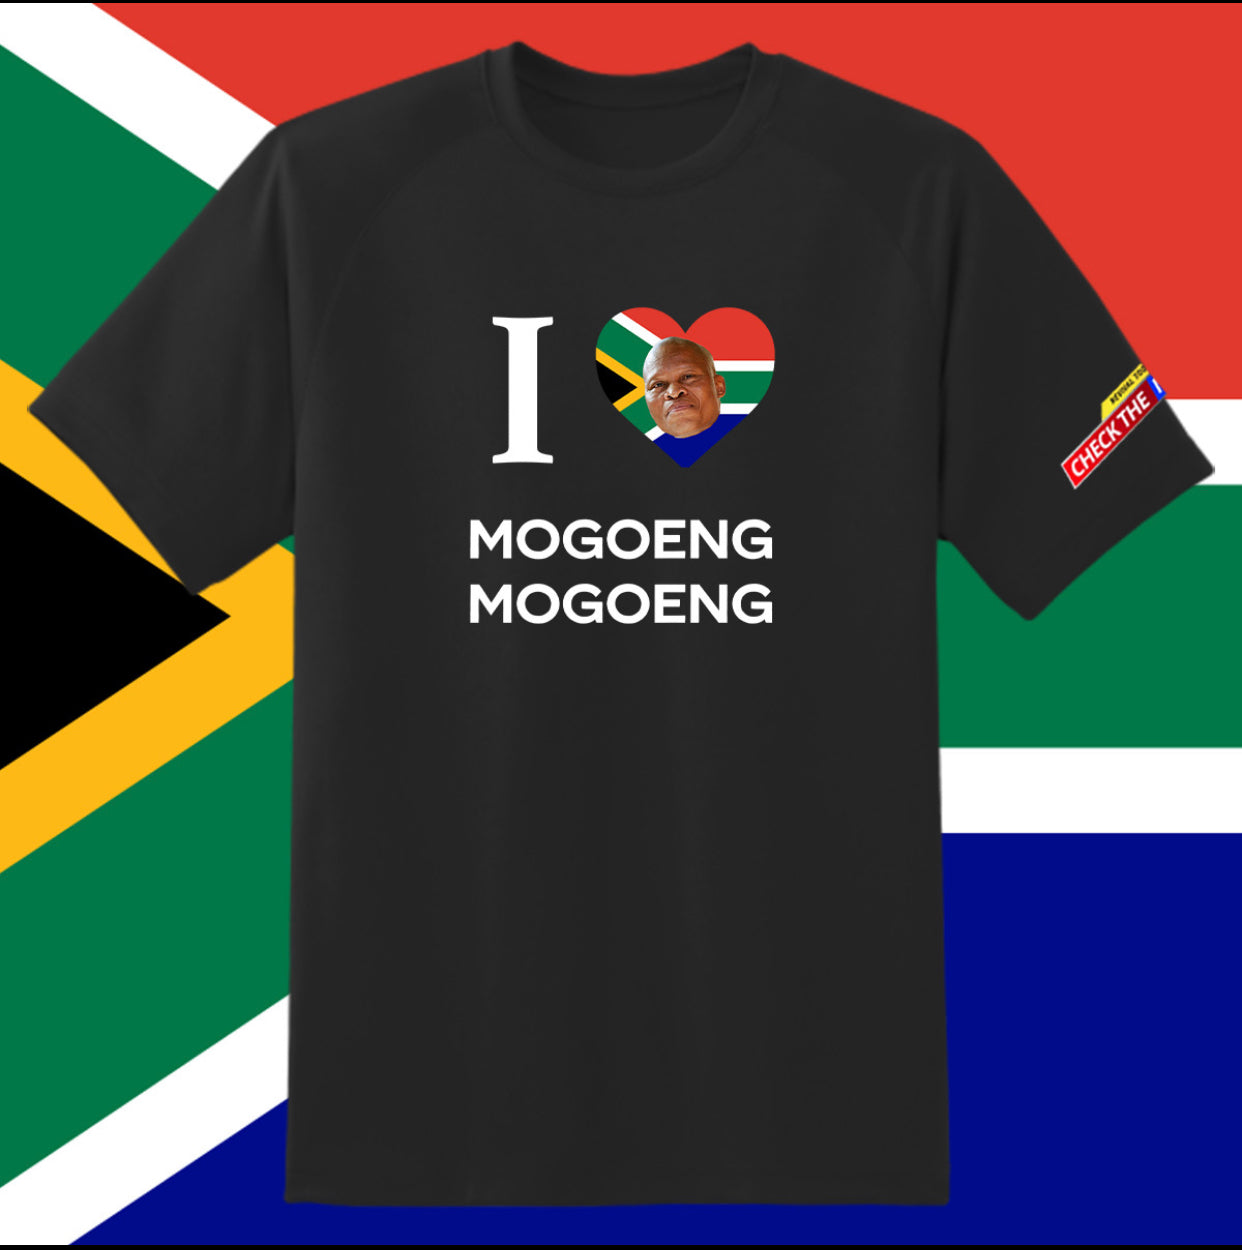 "I <3 MOGOENG" T-Shirt